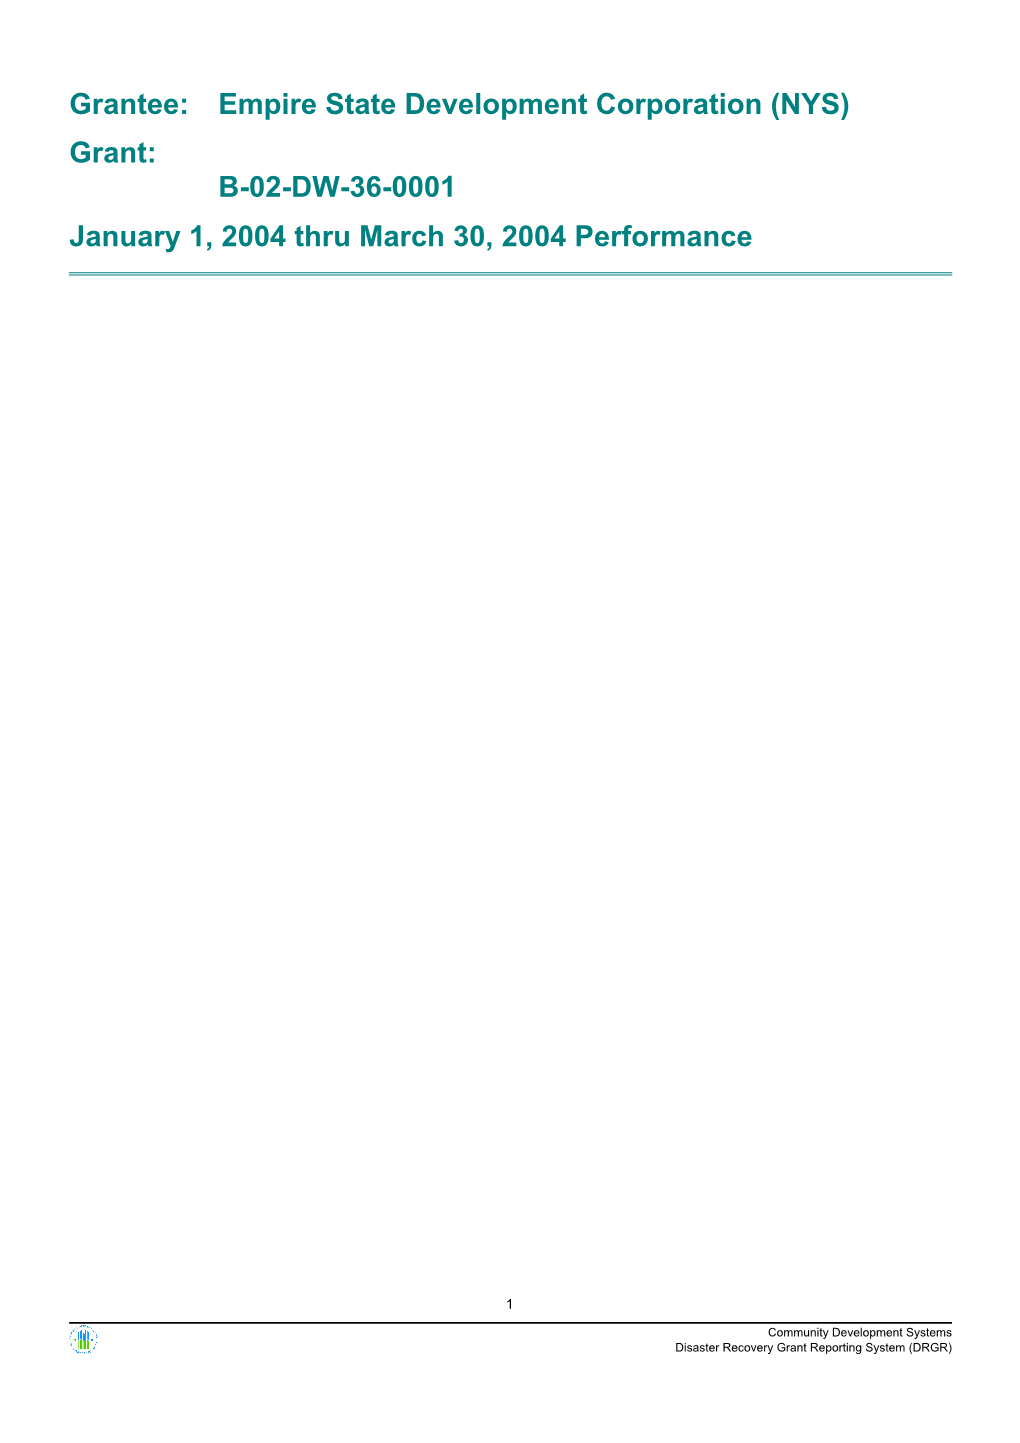 January 1, 2004 Thru March 30, 2004 Performance B-02-DW-36-0001